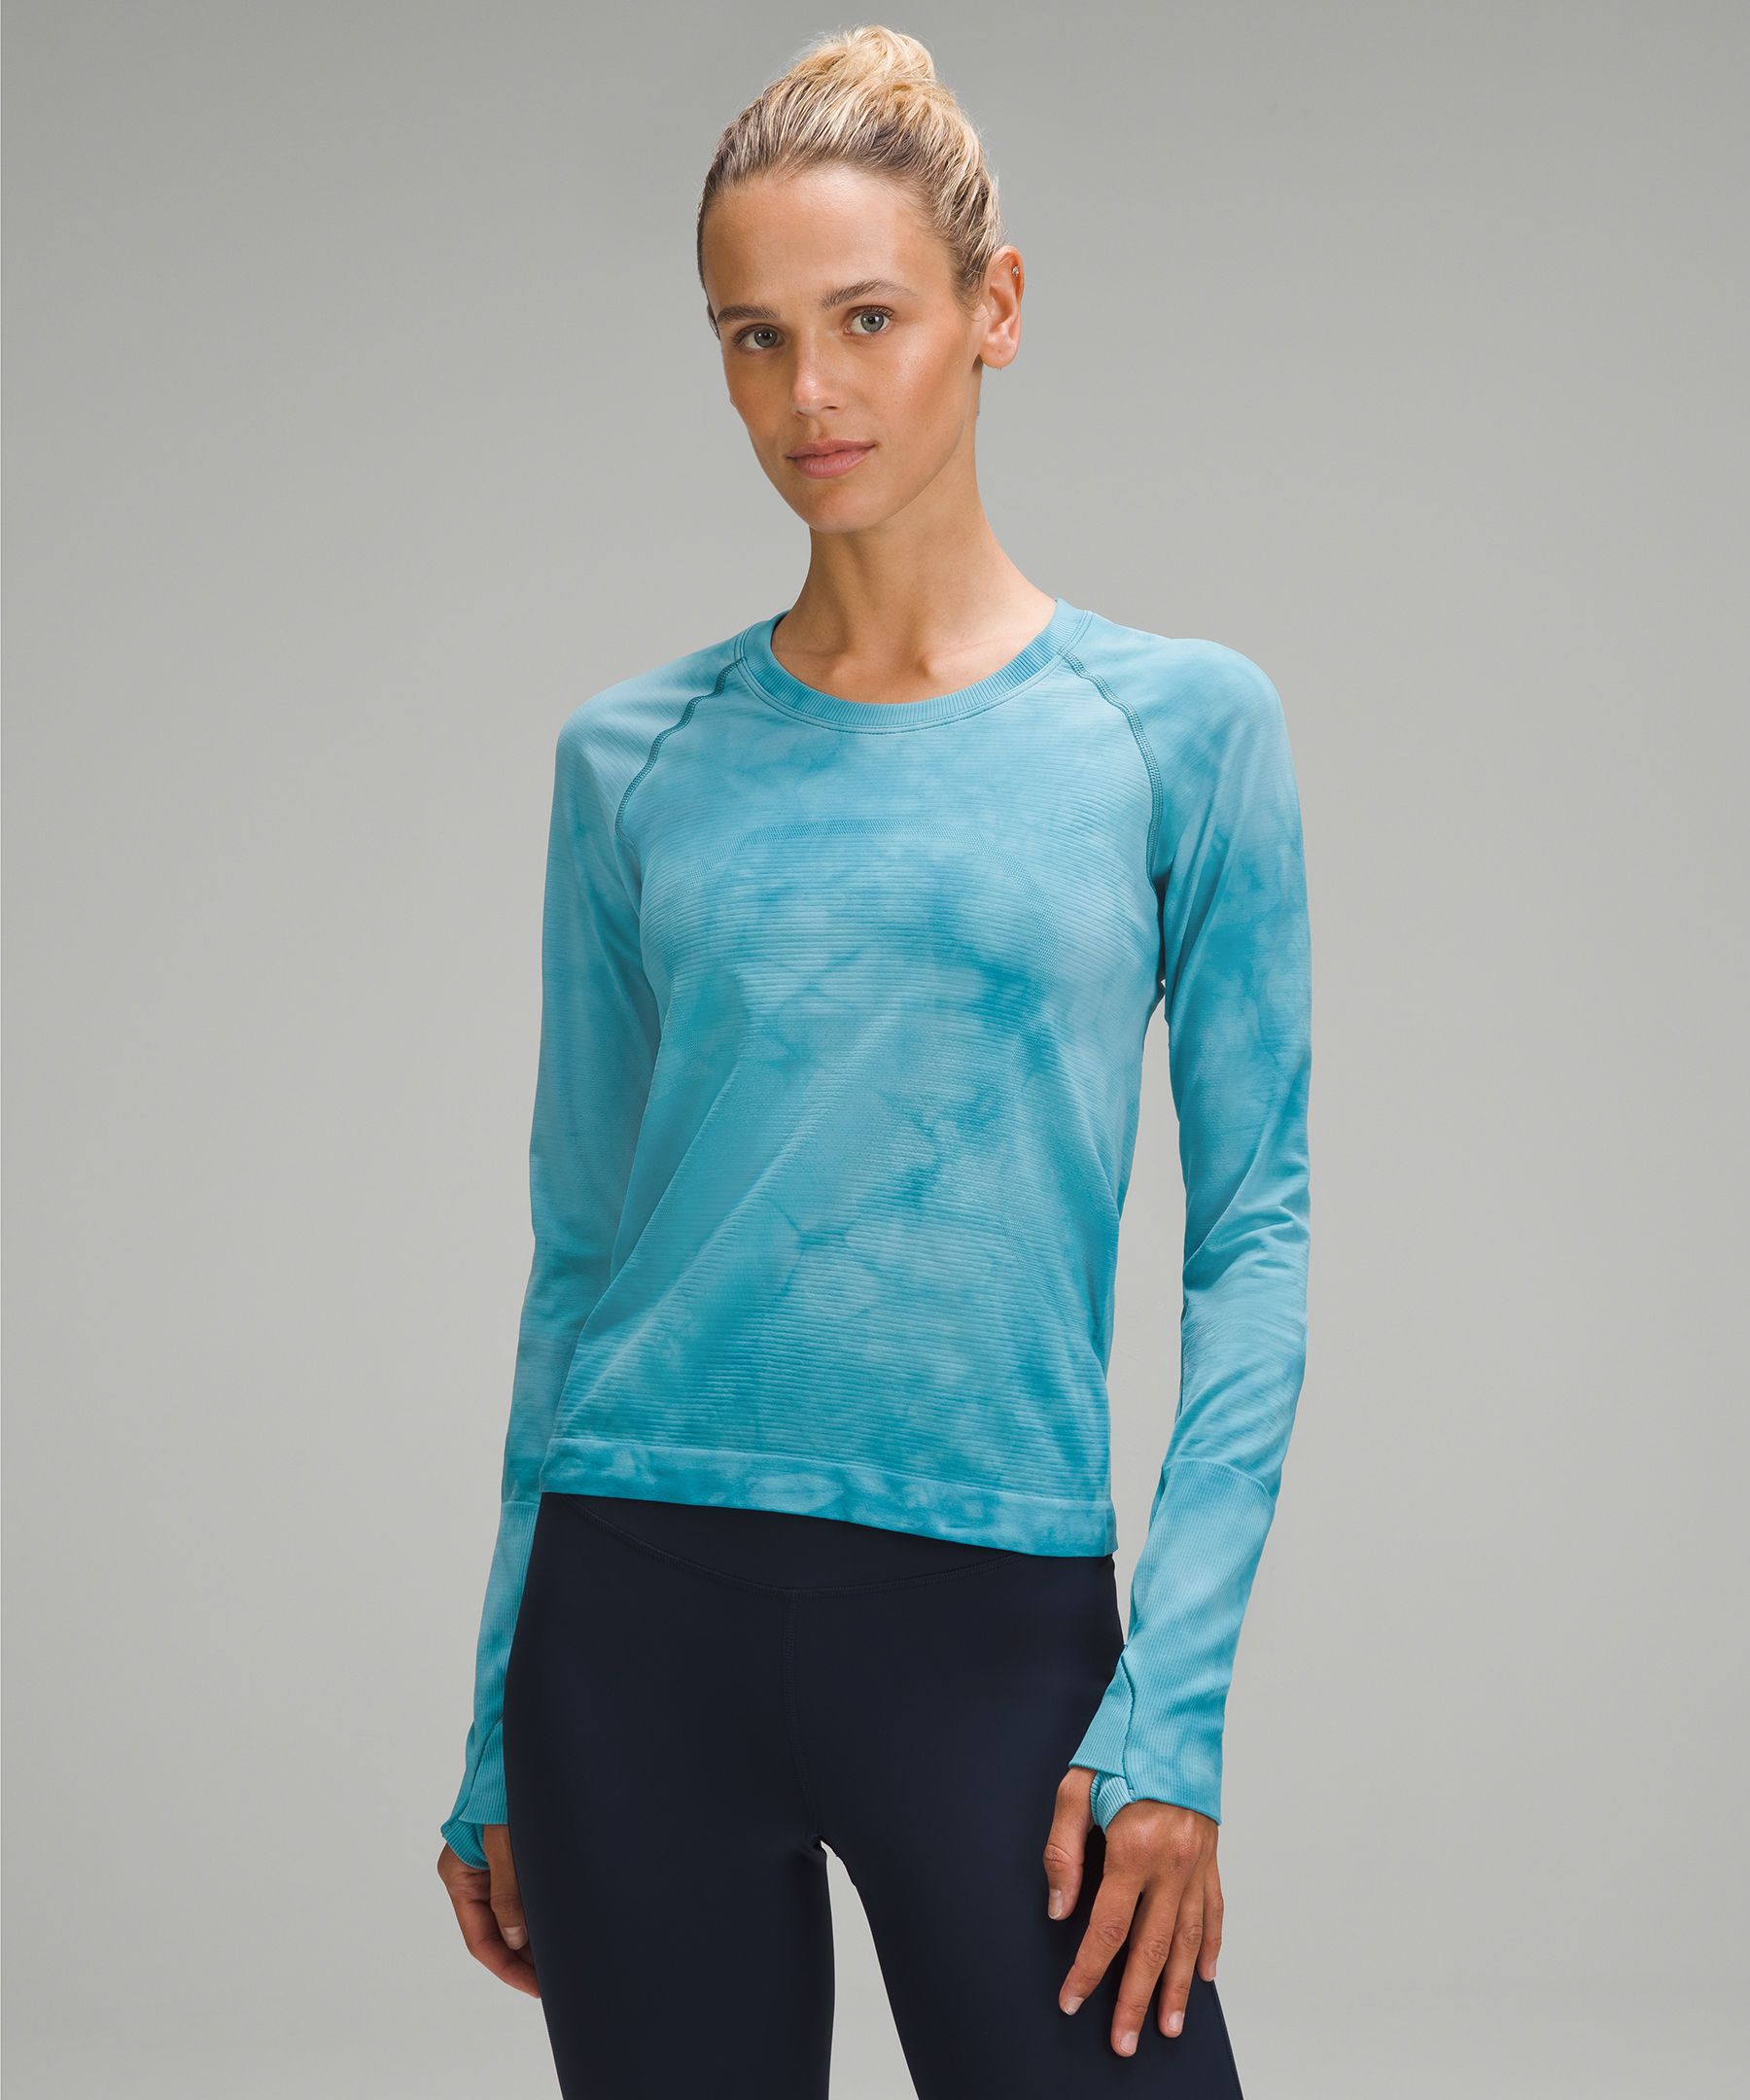 Swiftly Tech Long-Sleeve Shirt 2.0 Race Length *Marble Dye